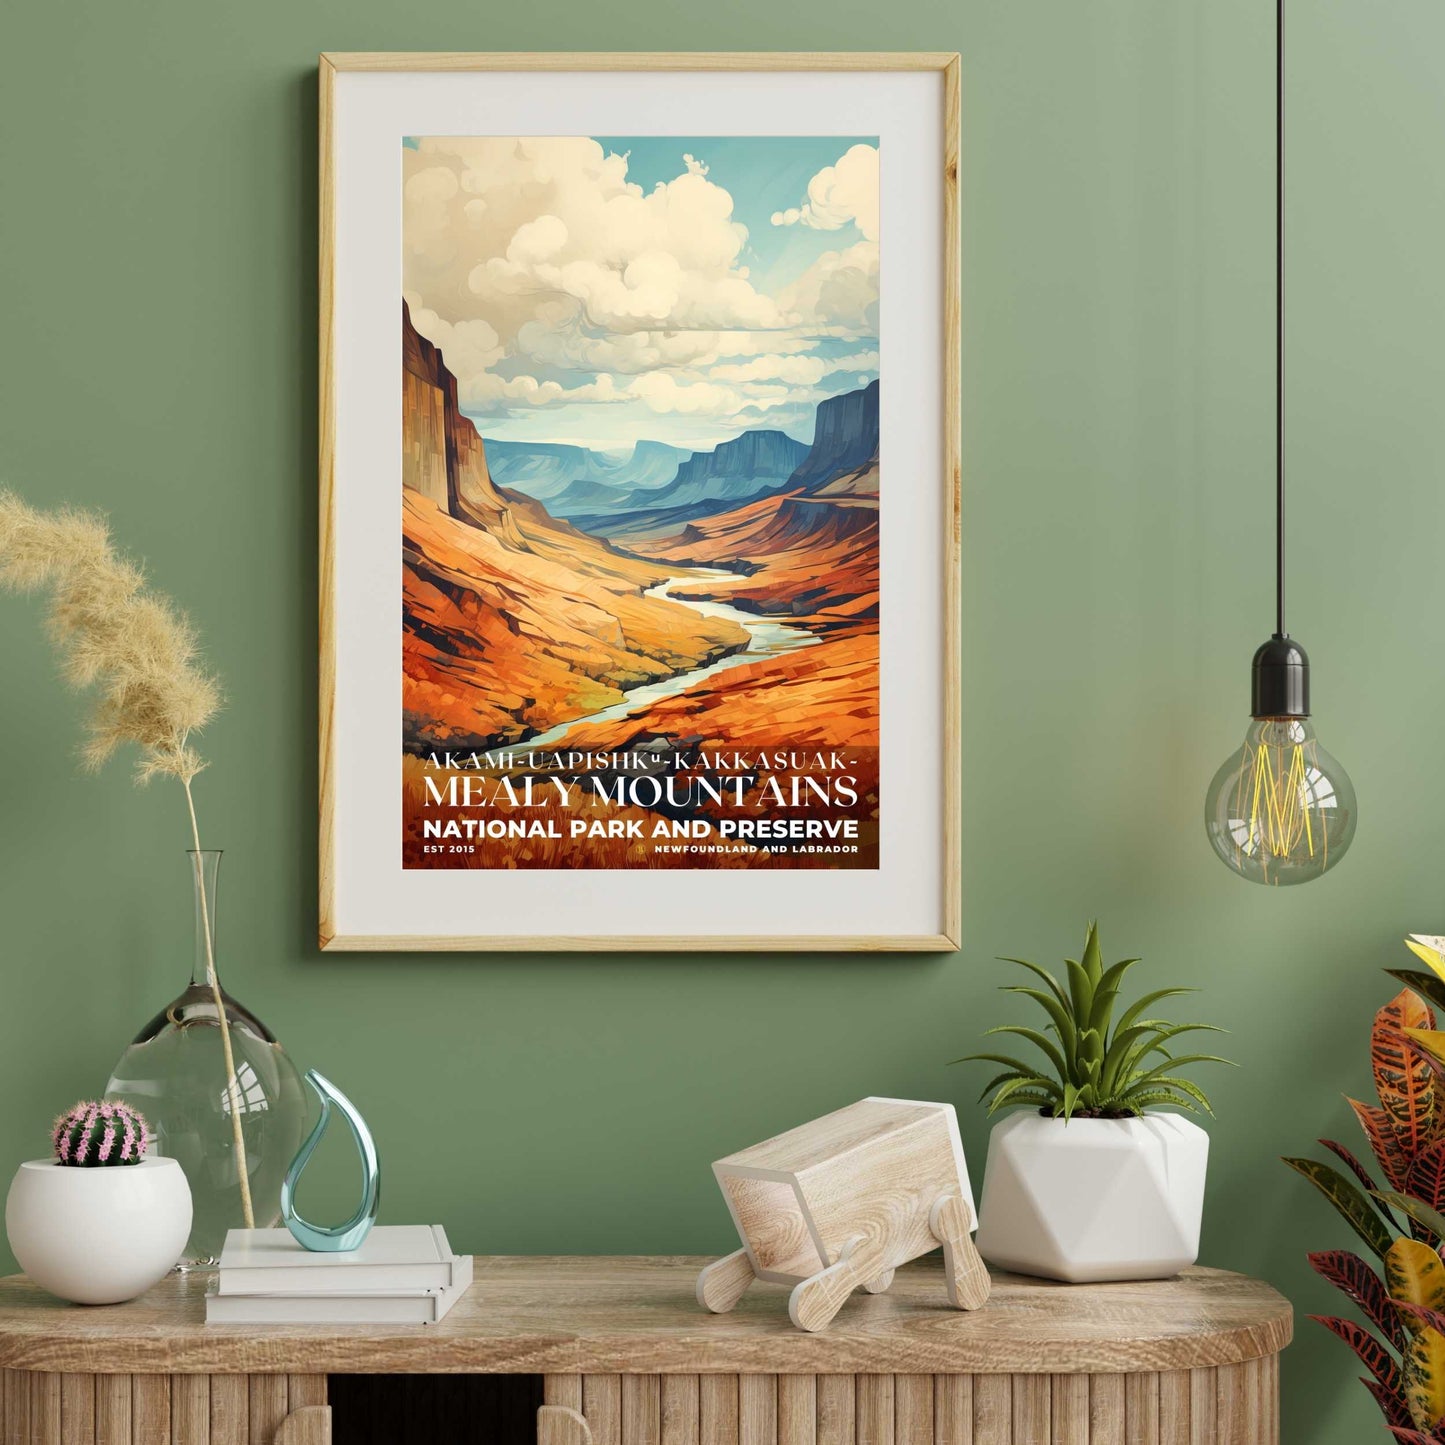 Akami-Uapishk-KakKasuak-Mealy Mountains National Park Poster | S06